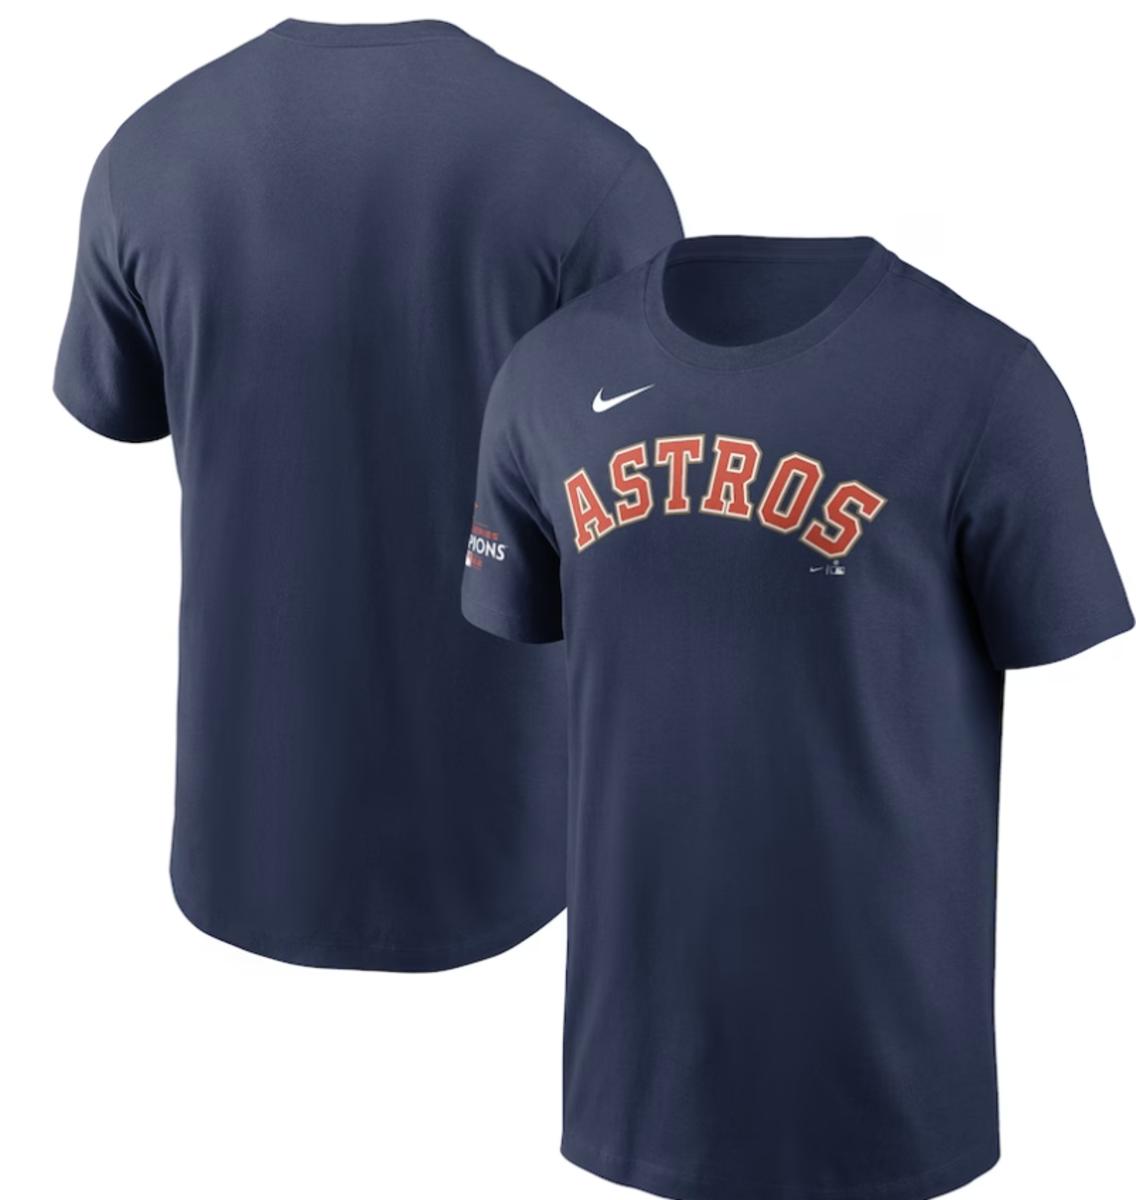 Houston Astros Gold Jerseys, Astros Gold Collection Gear, Astros